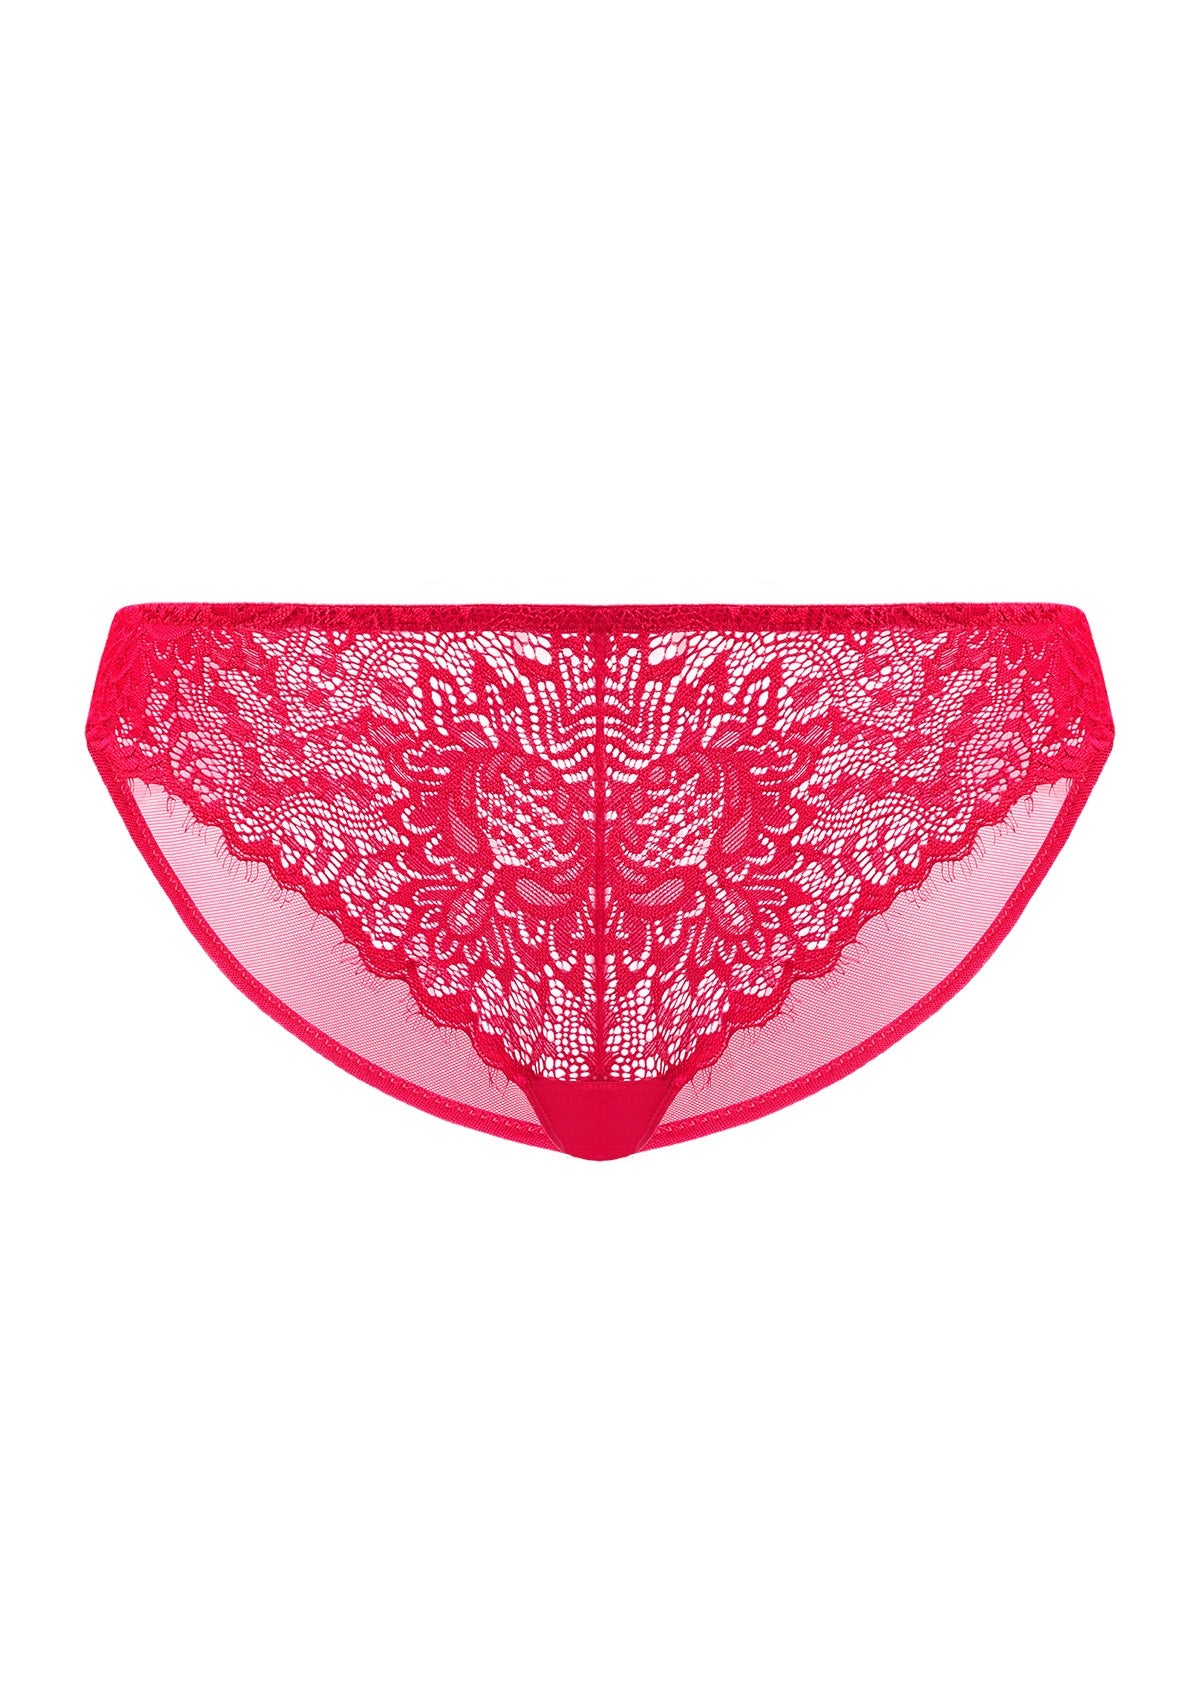 HSIA Sunflower Exquisite Raspberry Lace Bikini Underwear - L / Raspberry